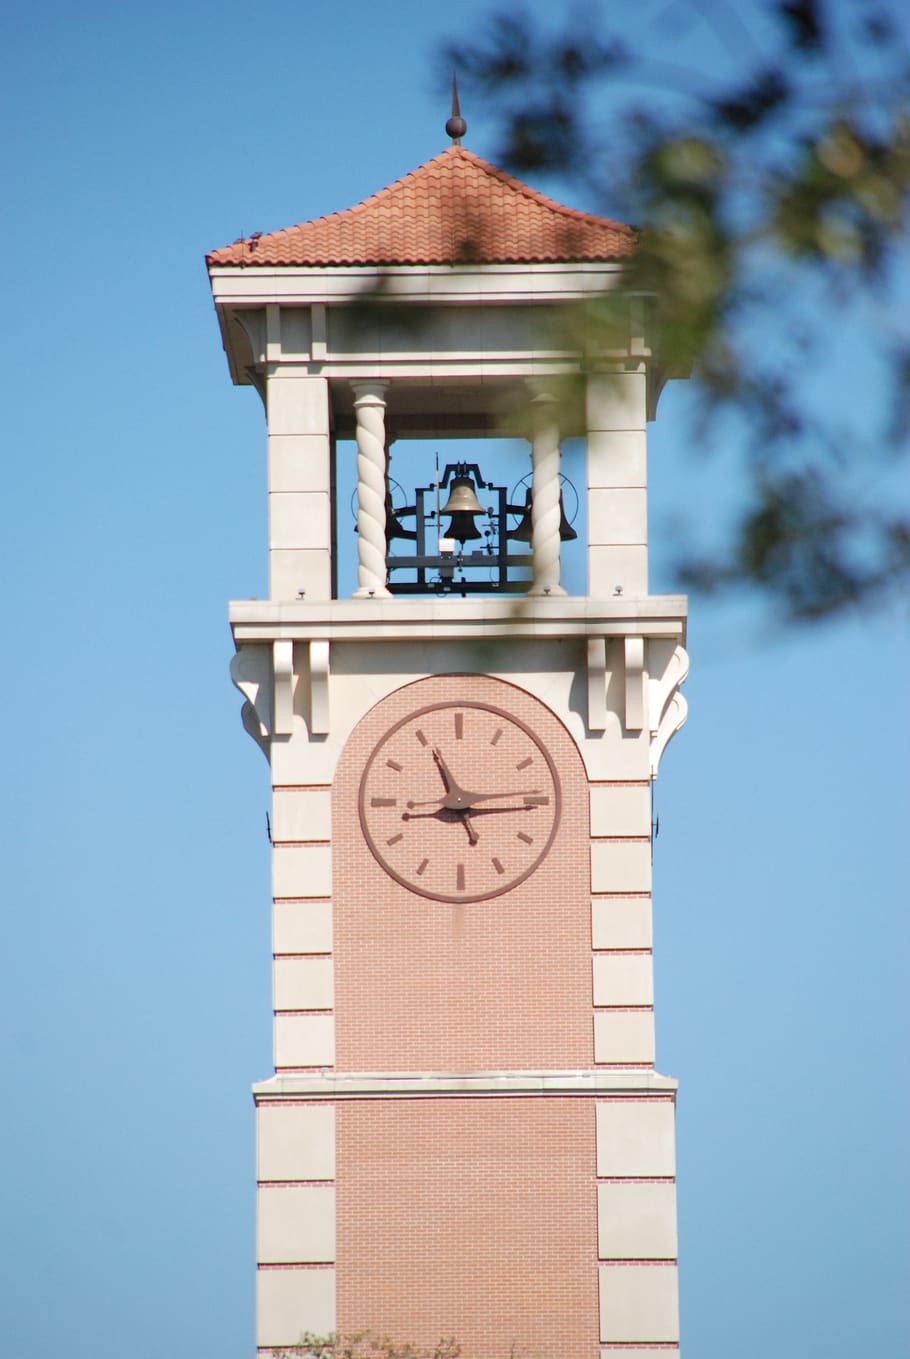 Hd Wallpaper University University Of South Alabama Bell Tower Clock Wallpaper Flare